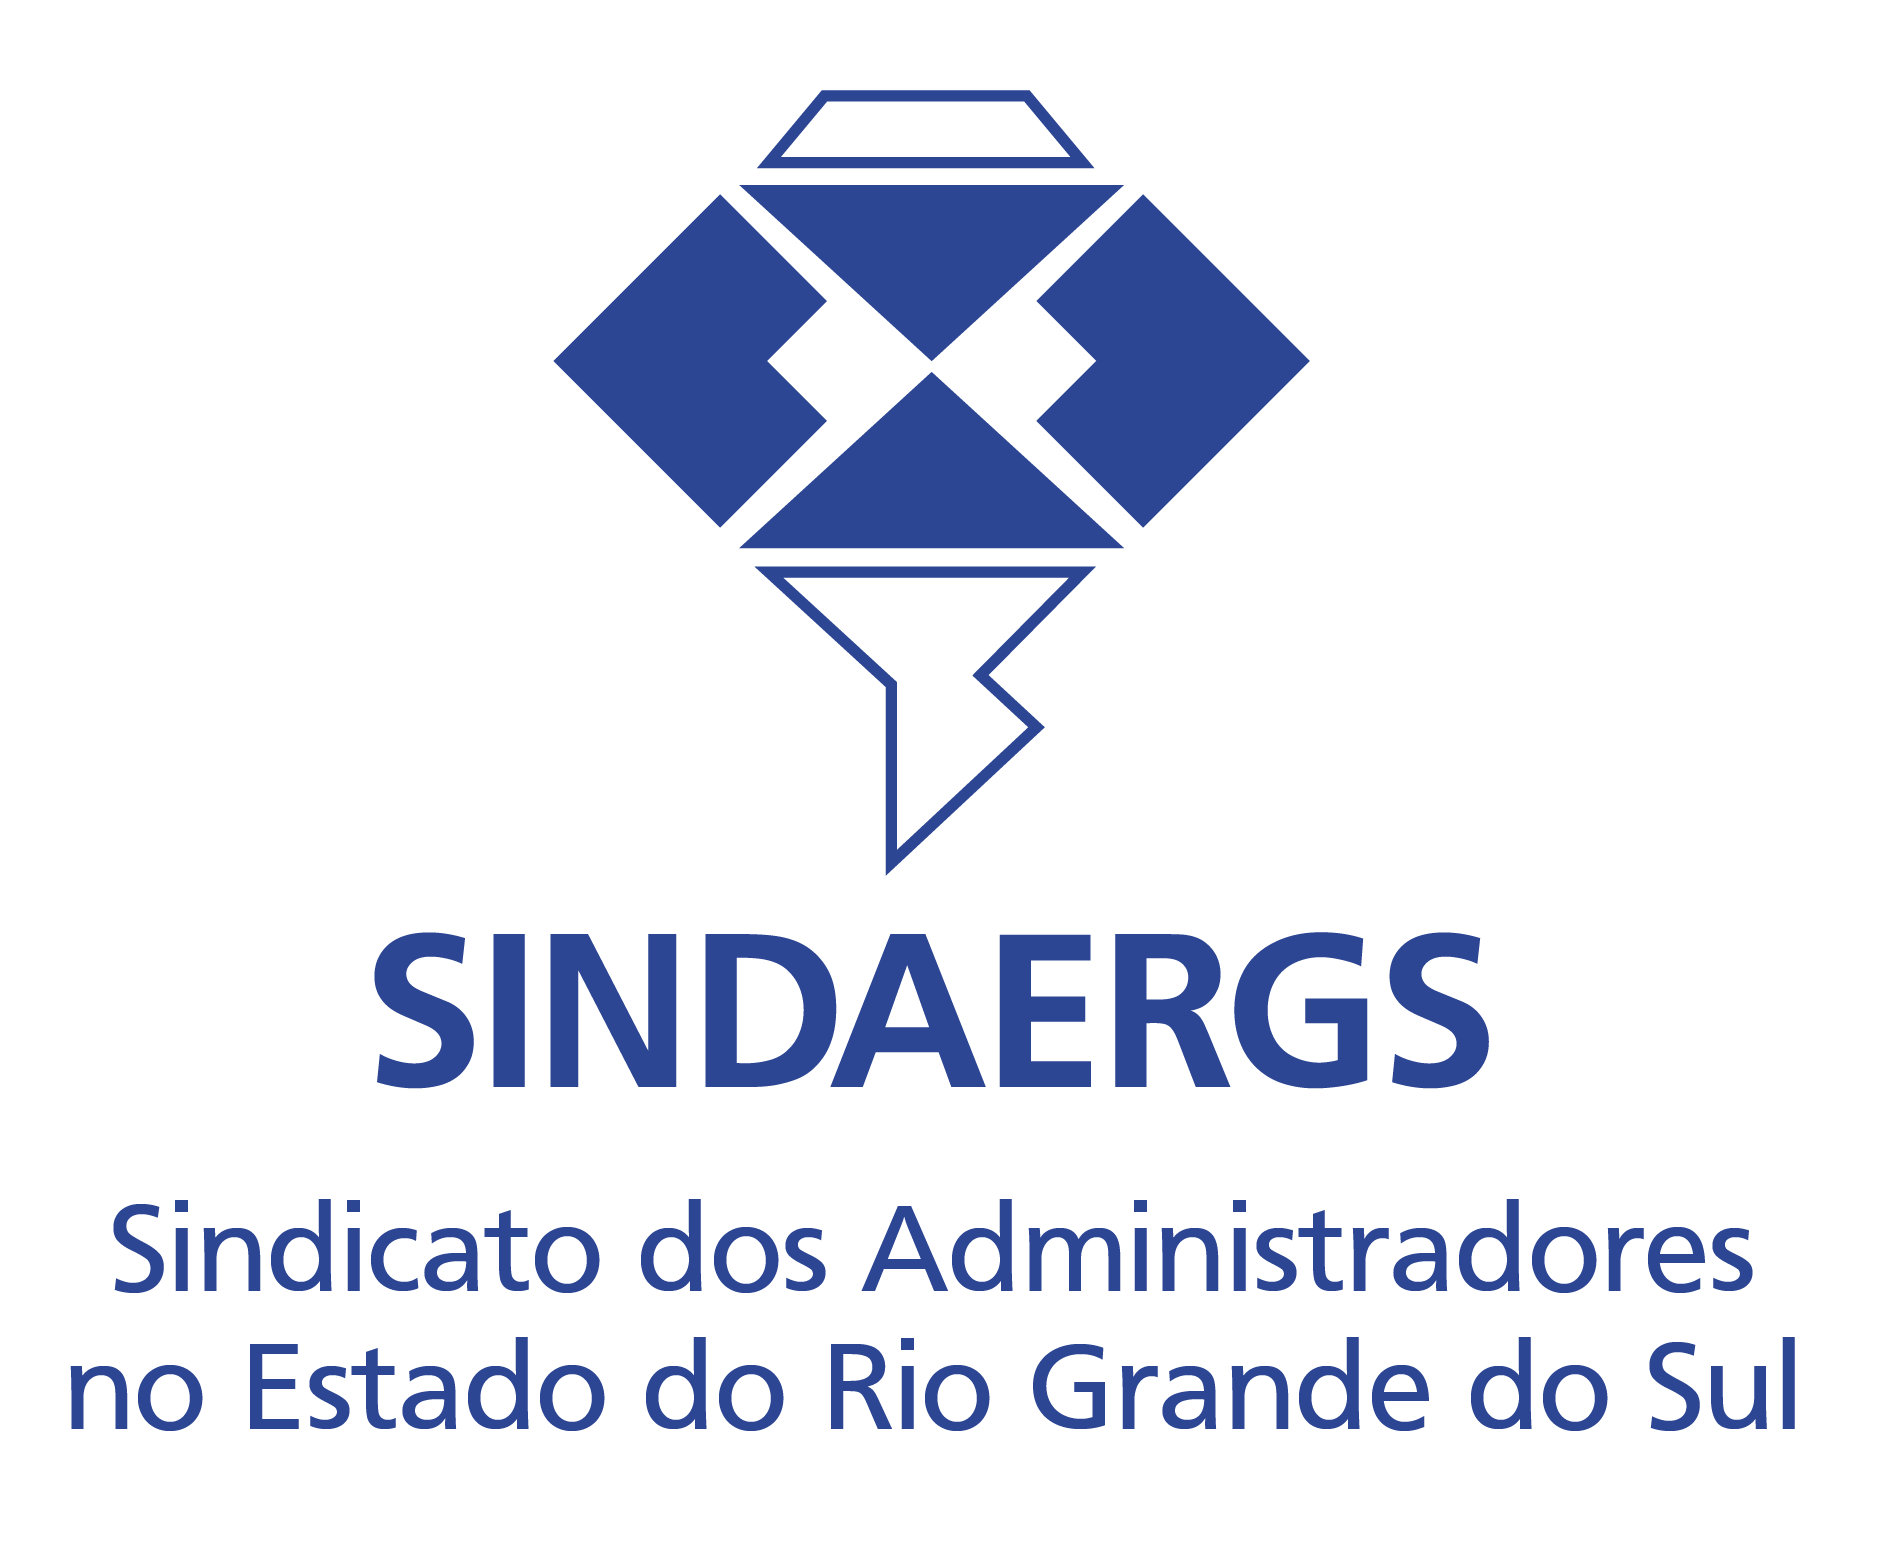 SINDAERGS - Sindicato dos Administradores no Estado do Rio Grande do Sul